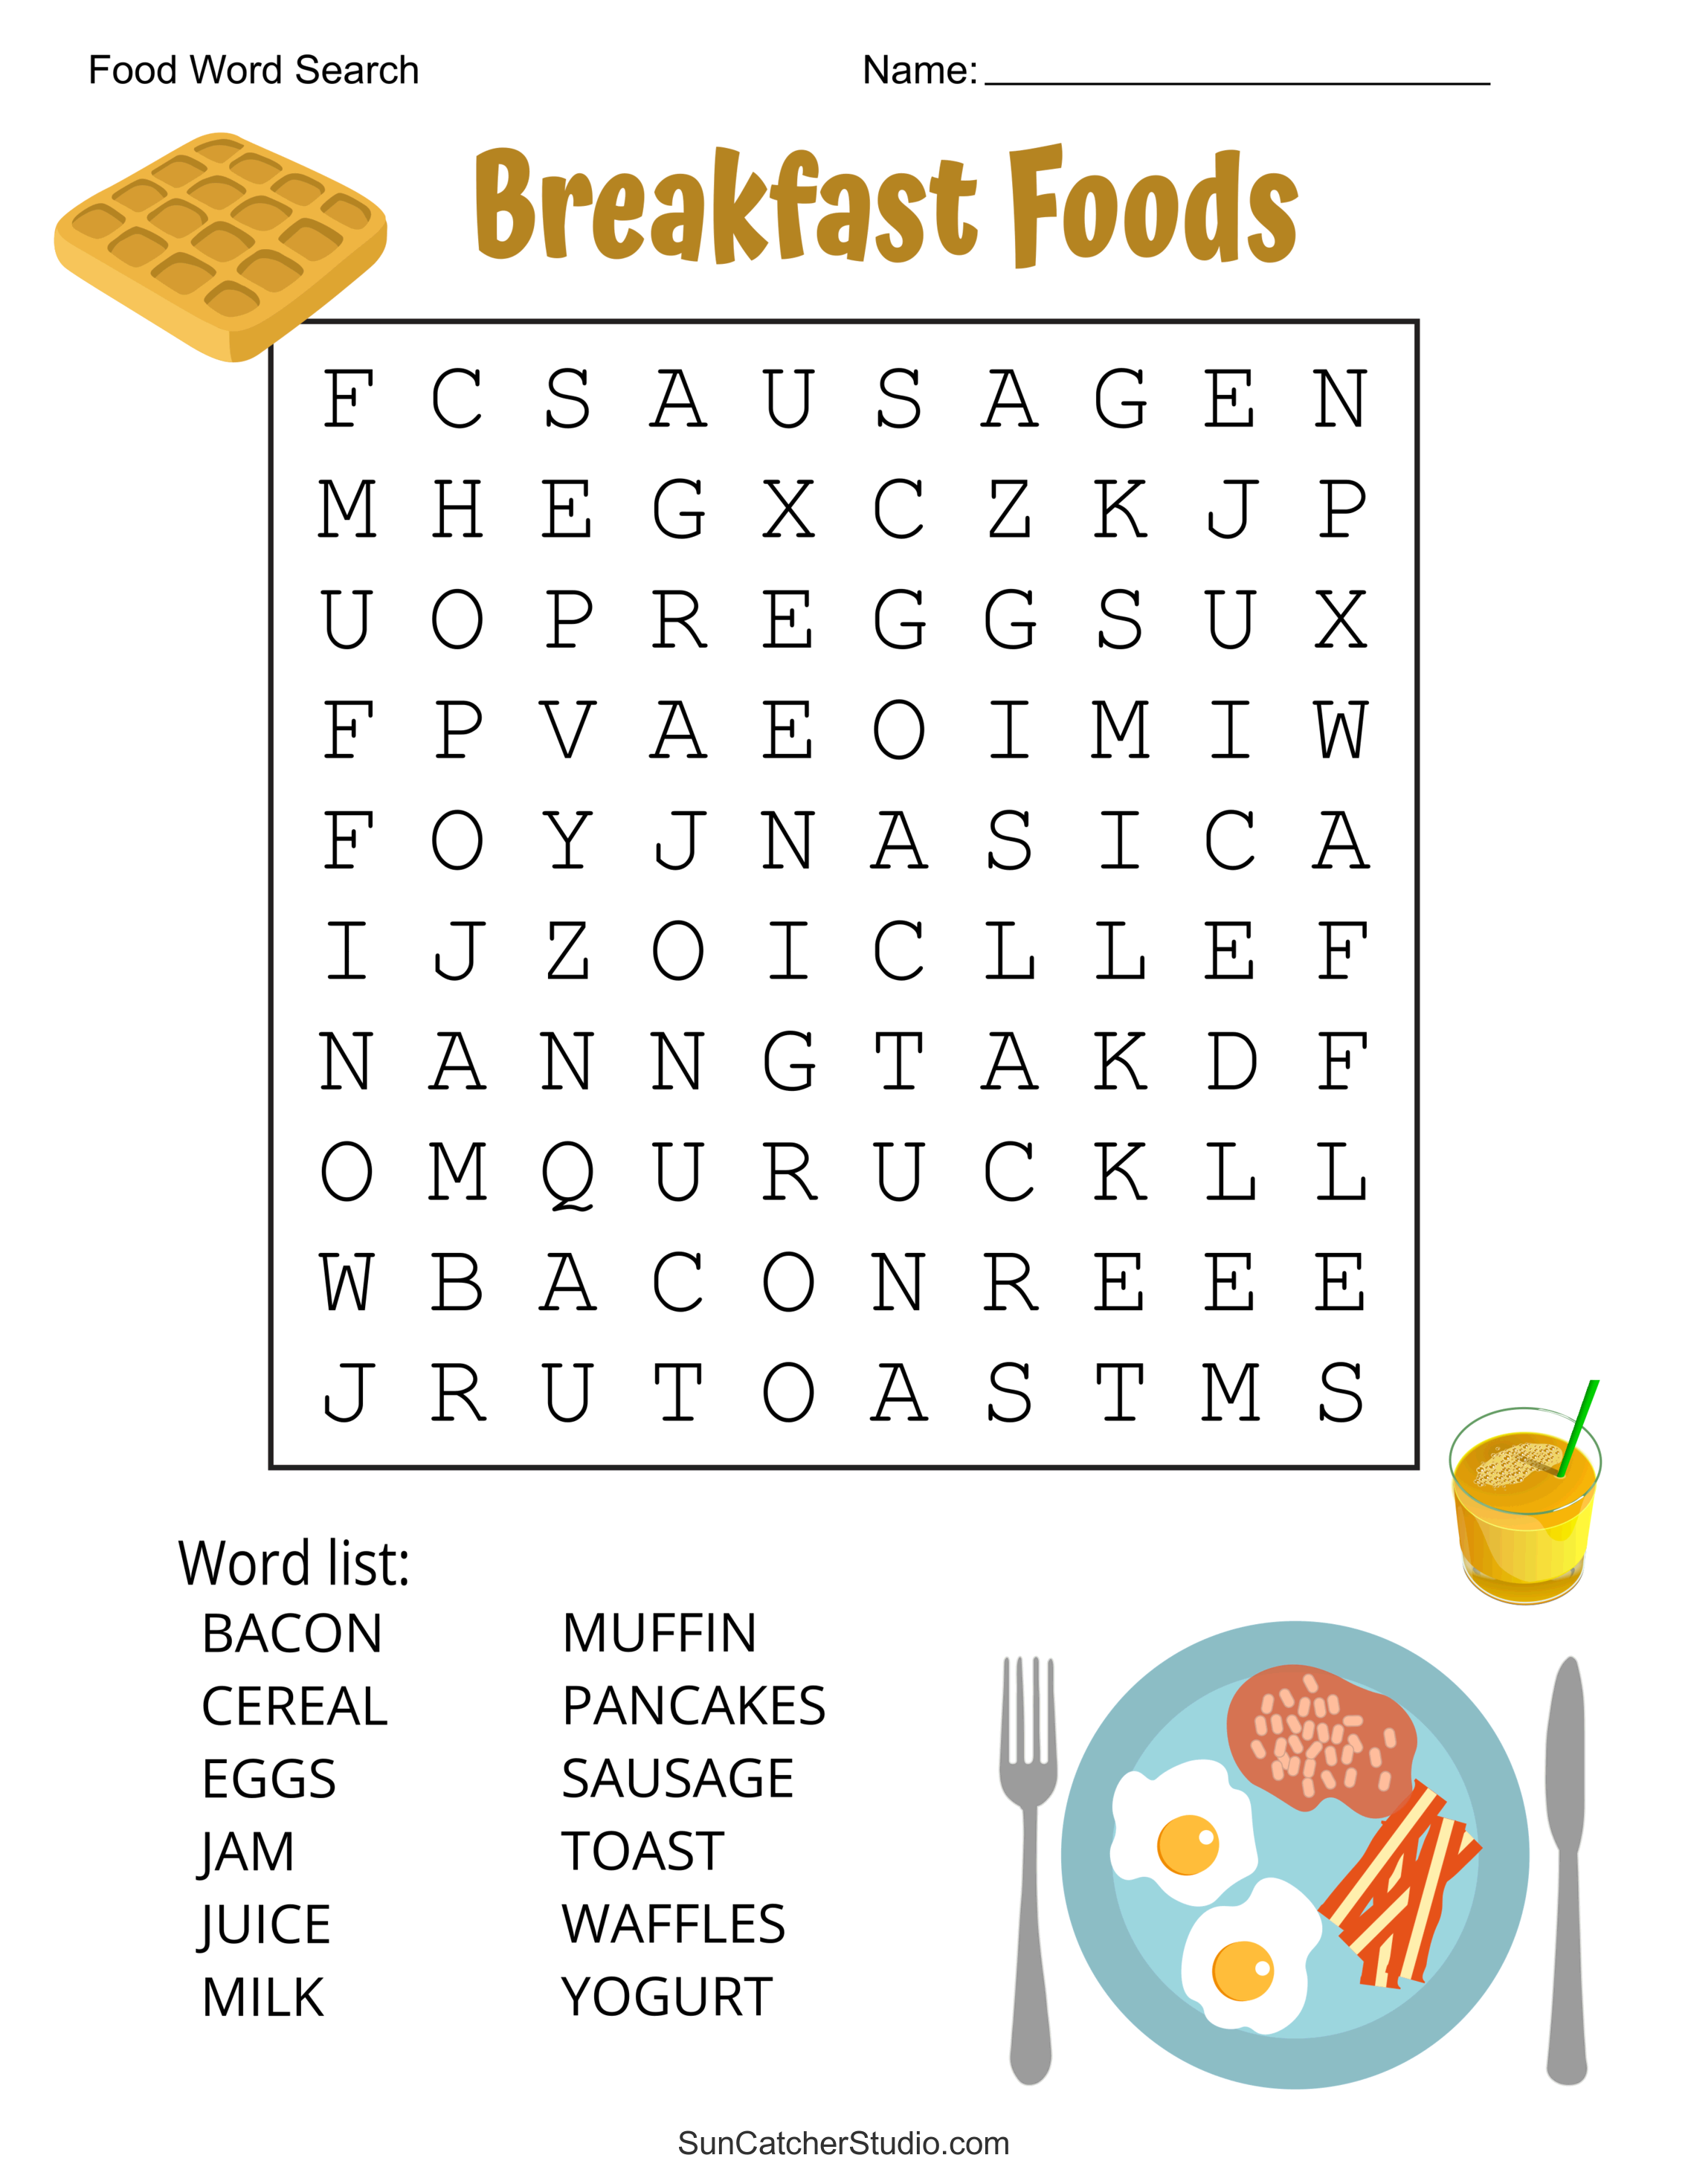 Food Word Search Printable - FREE - Growing Play